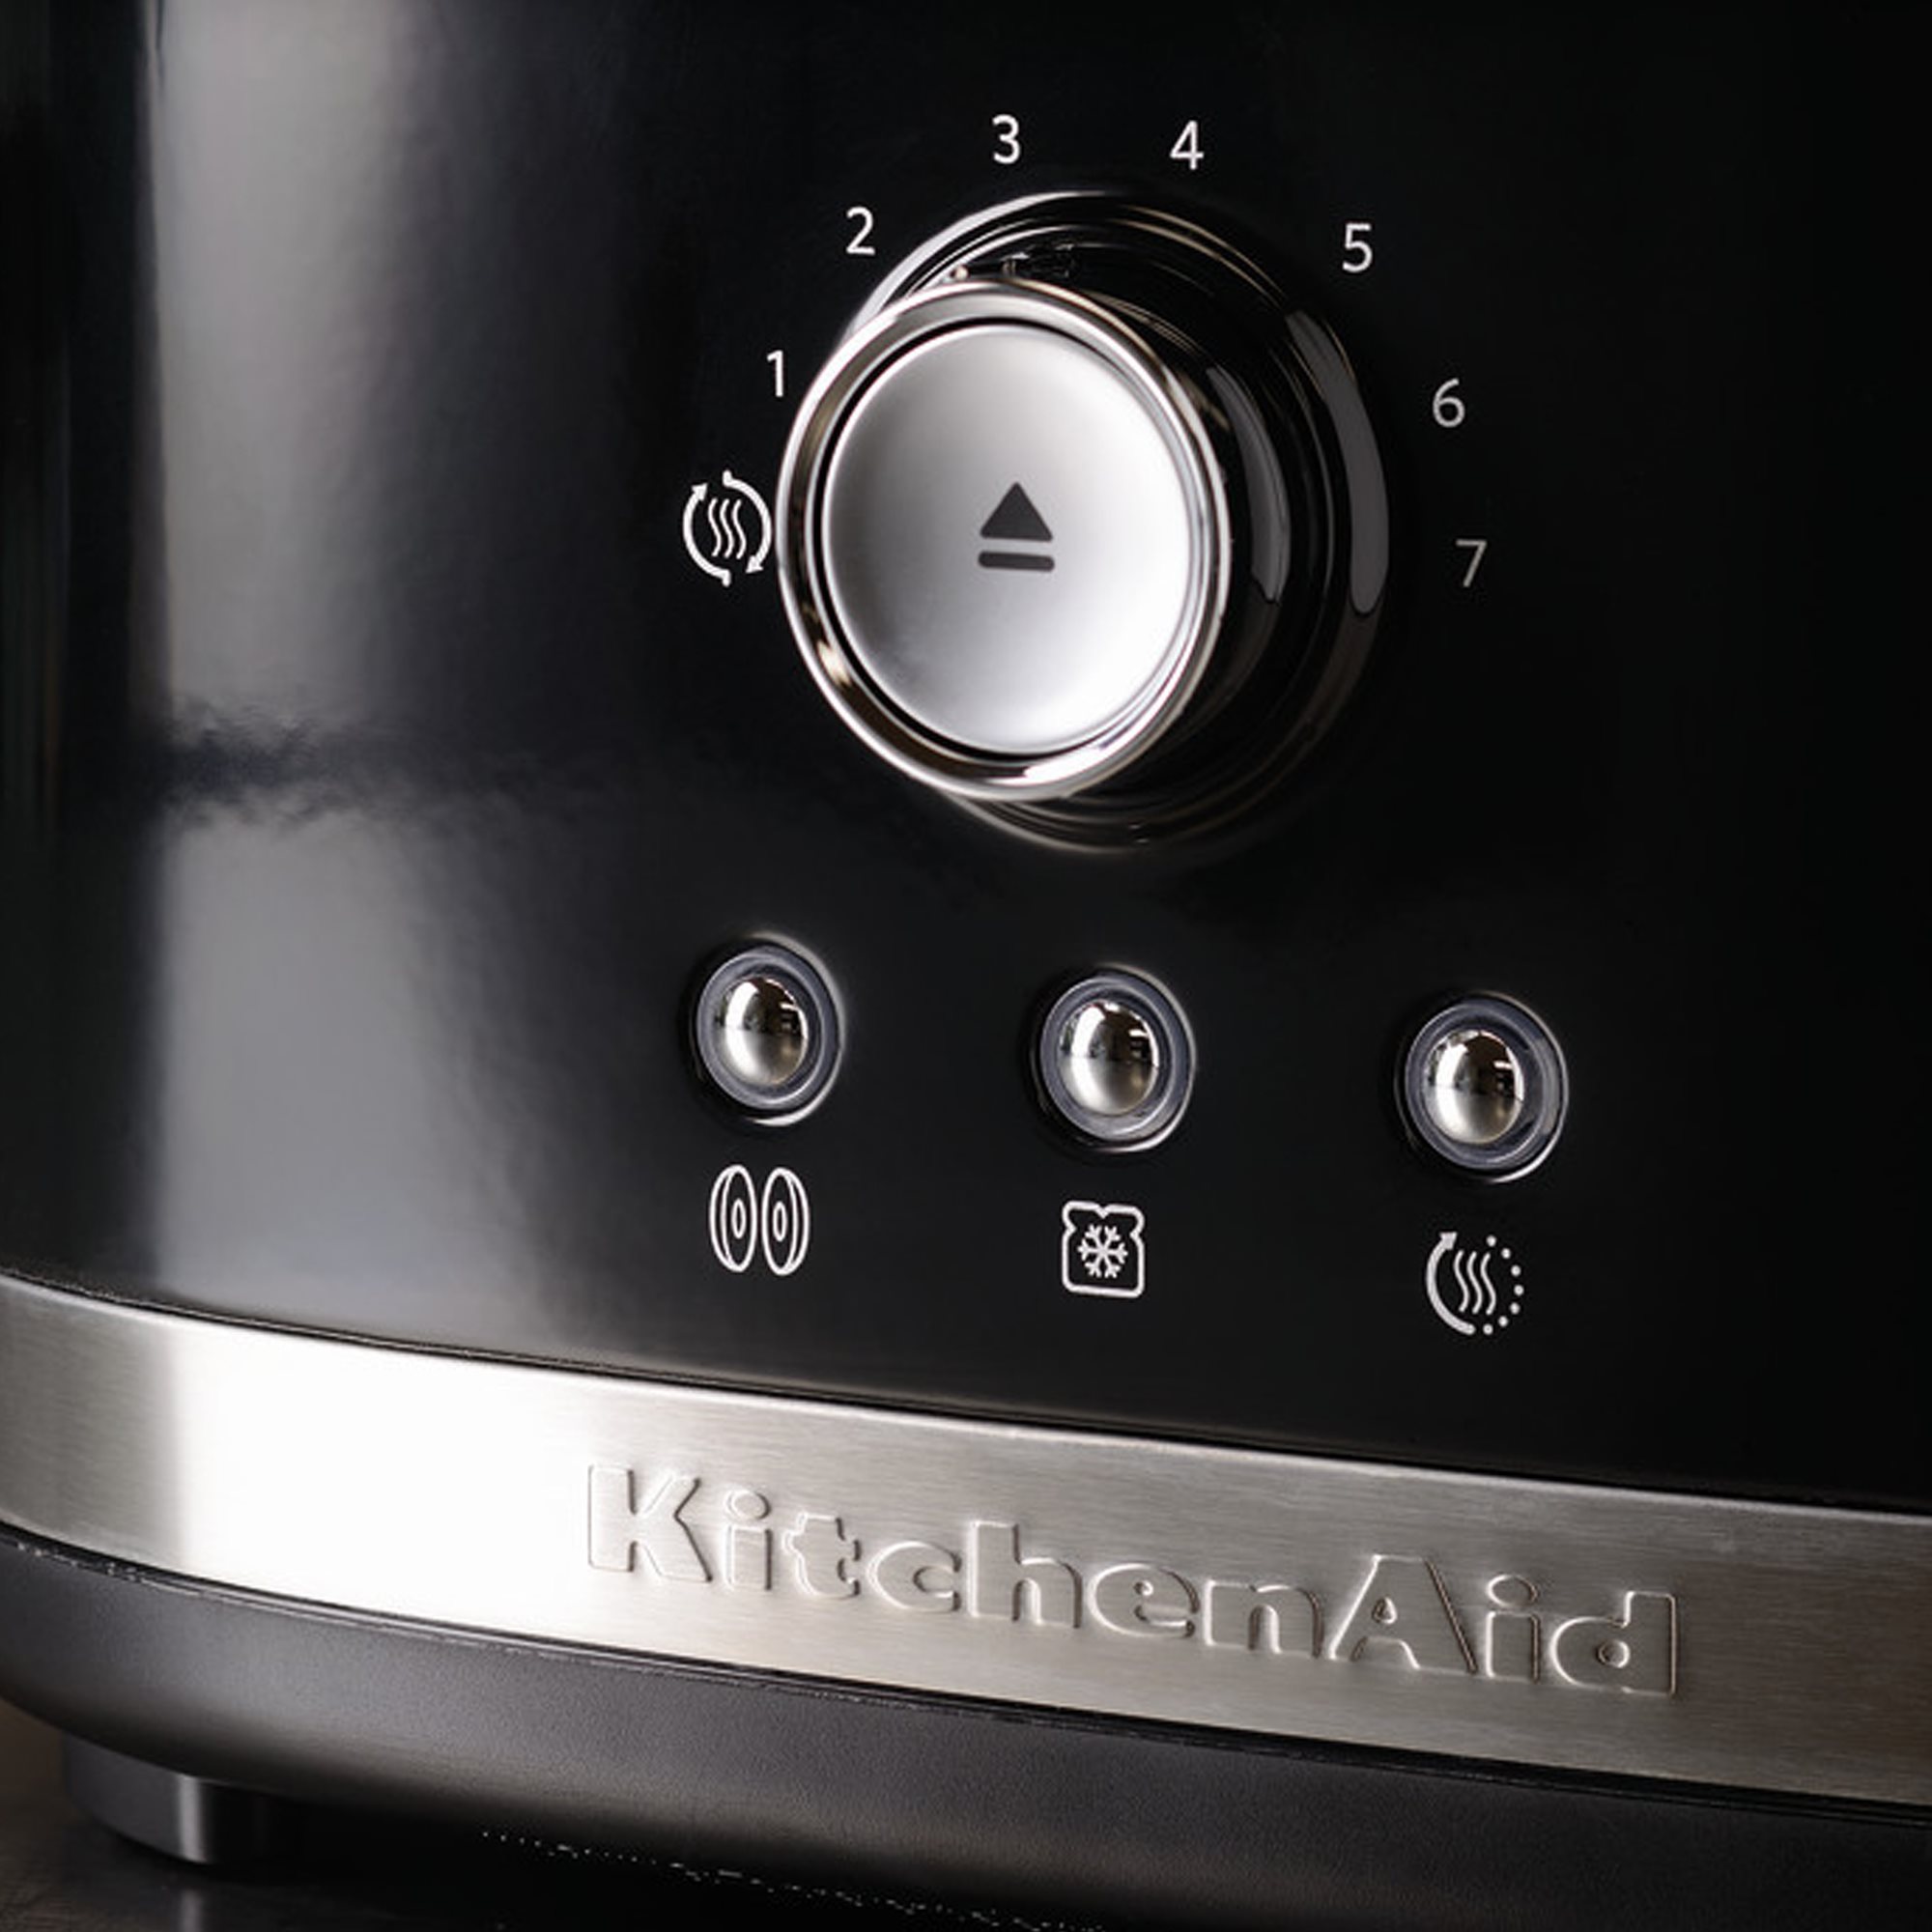 KitchenAid 5KMT4116BOB 4 Slice Long Slot Toaster - ONYX